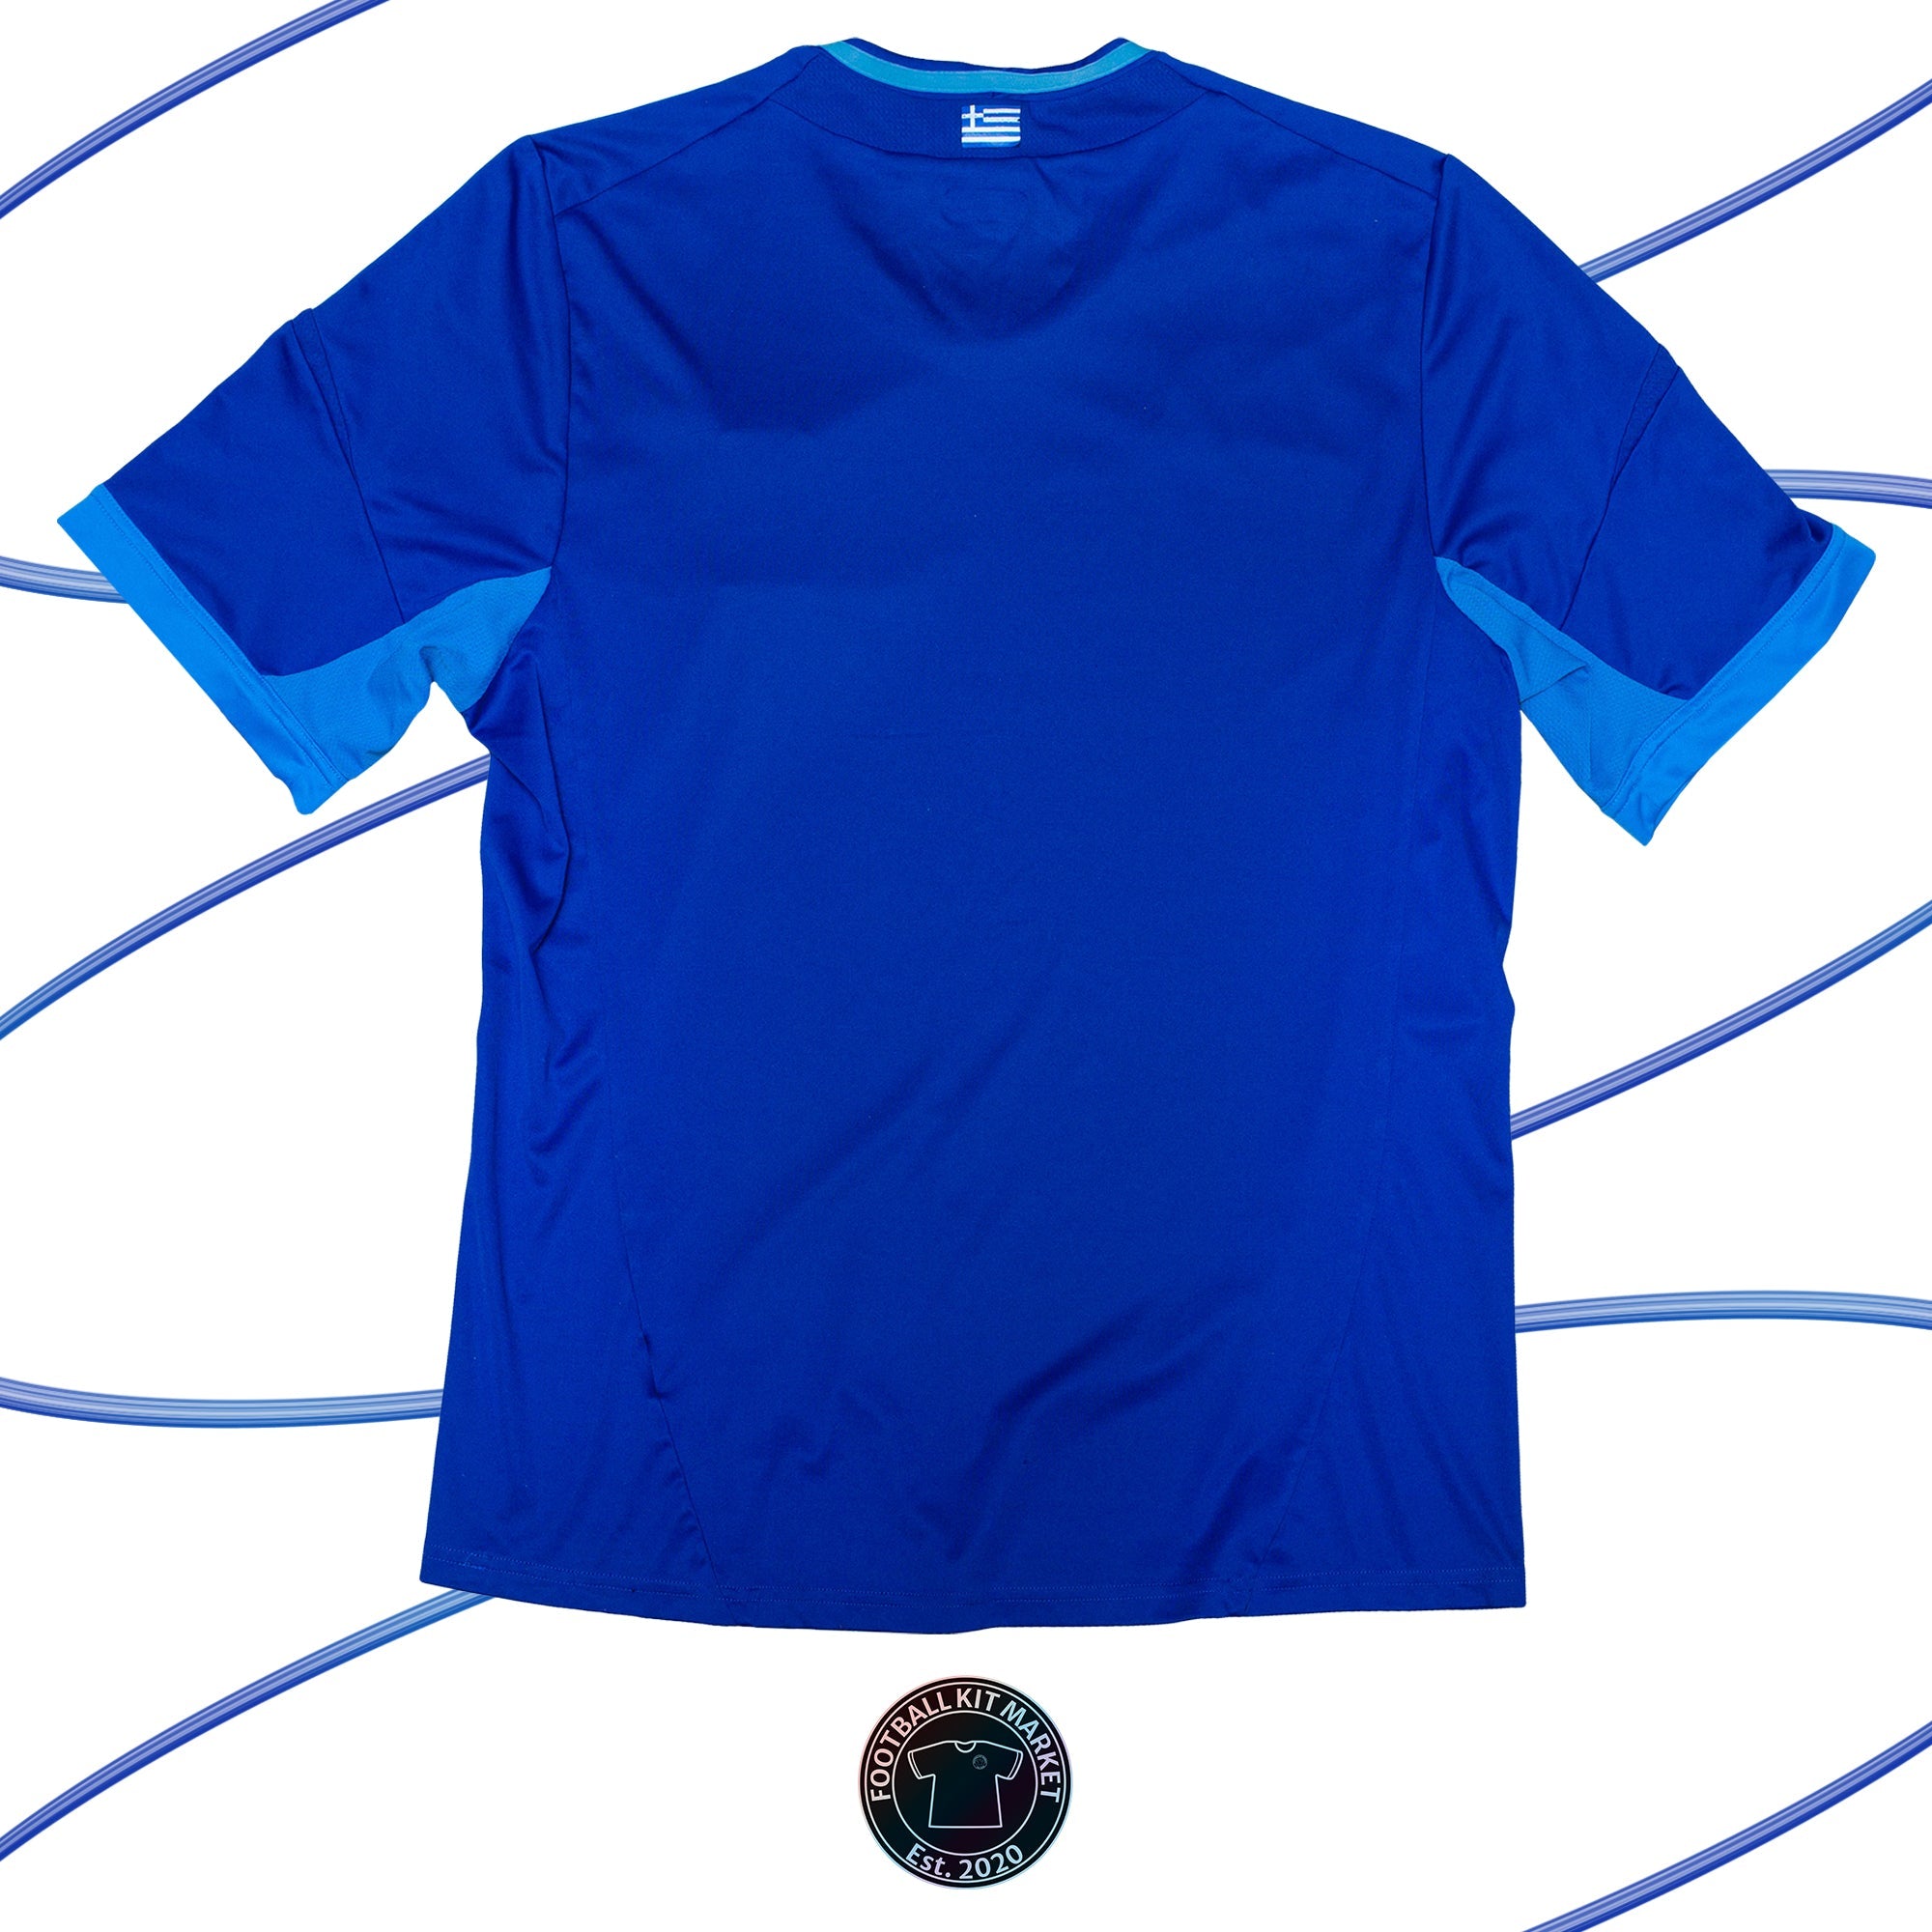 Genuine GREECE Away Shirt (2012-2014) - ADIDAS (XL) - Product Image from Football Kit Market